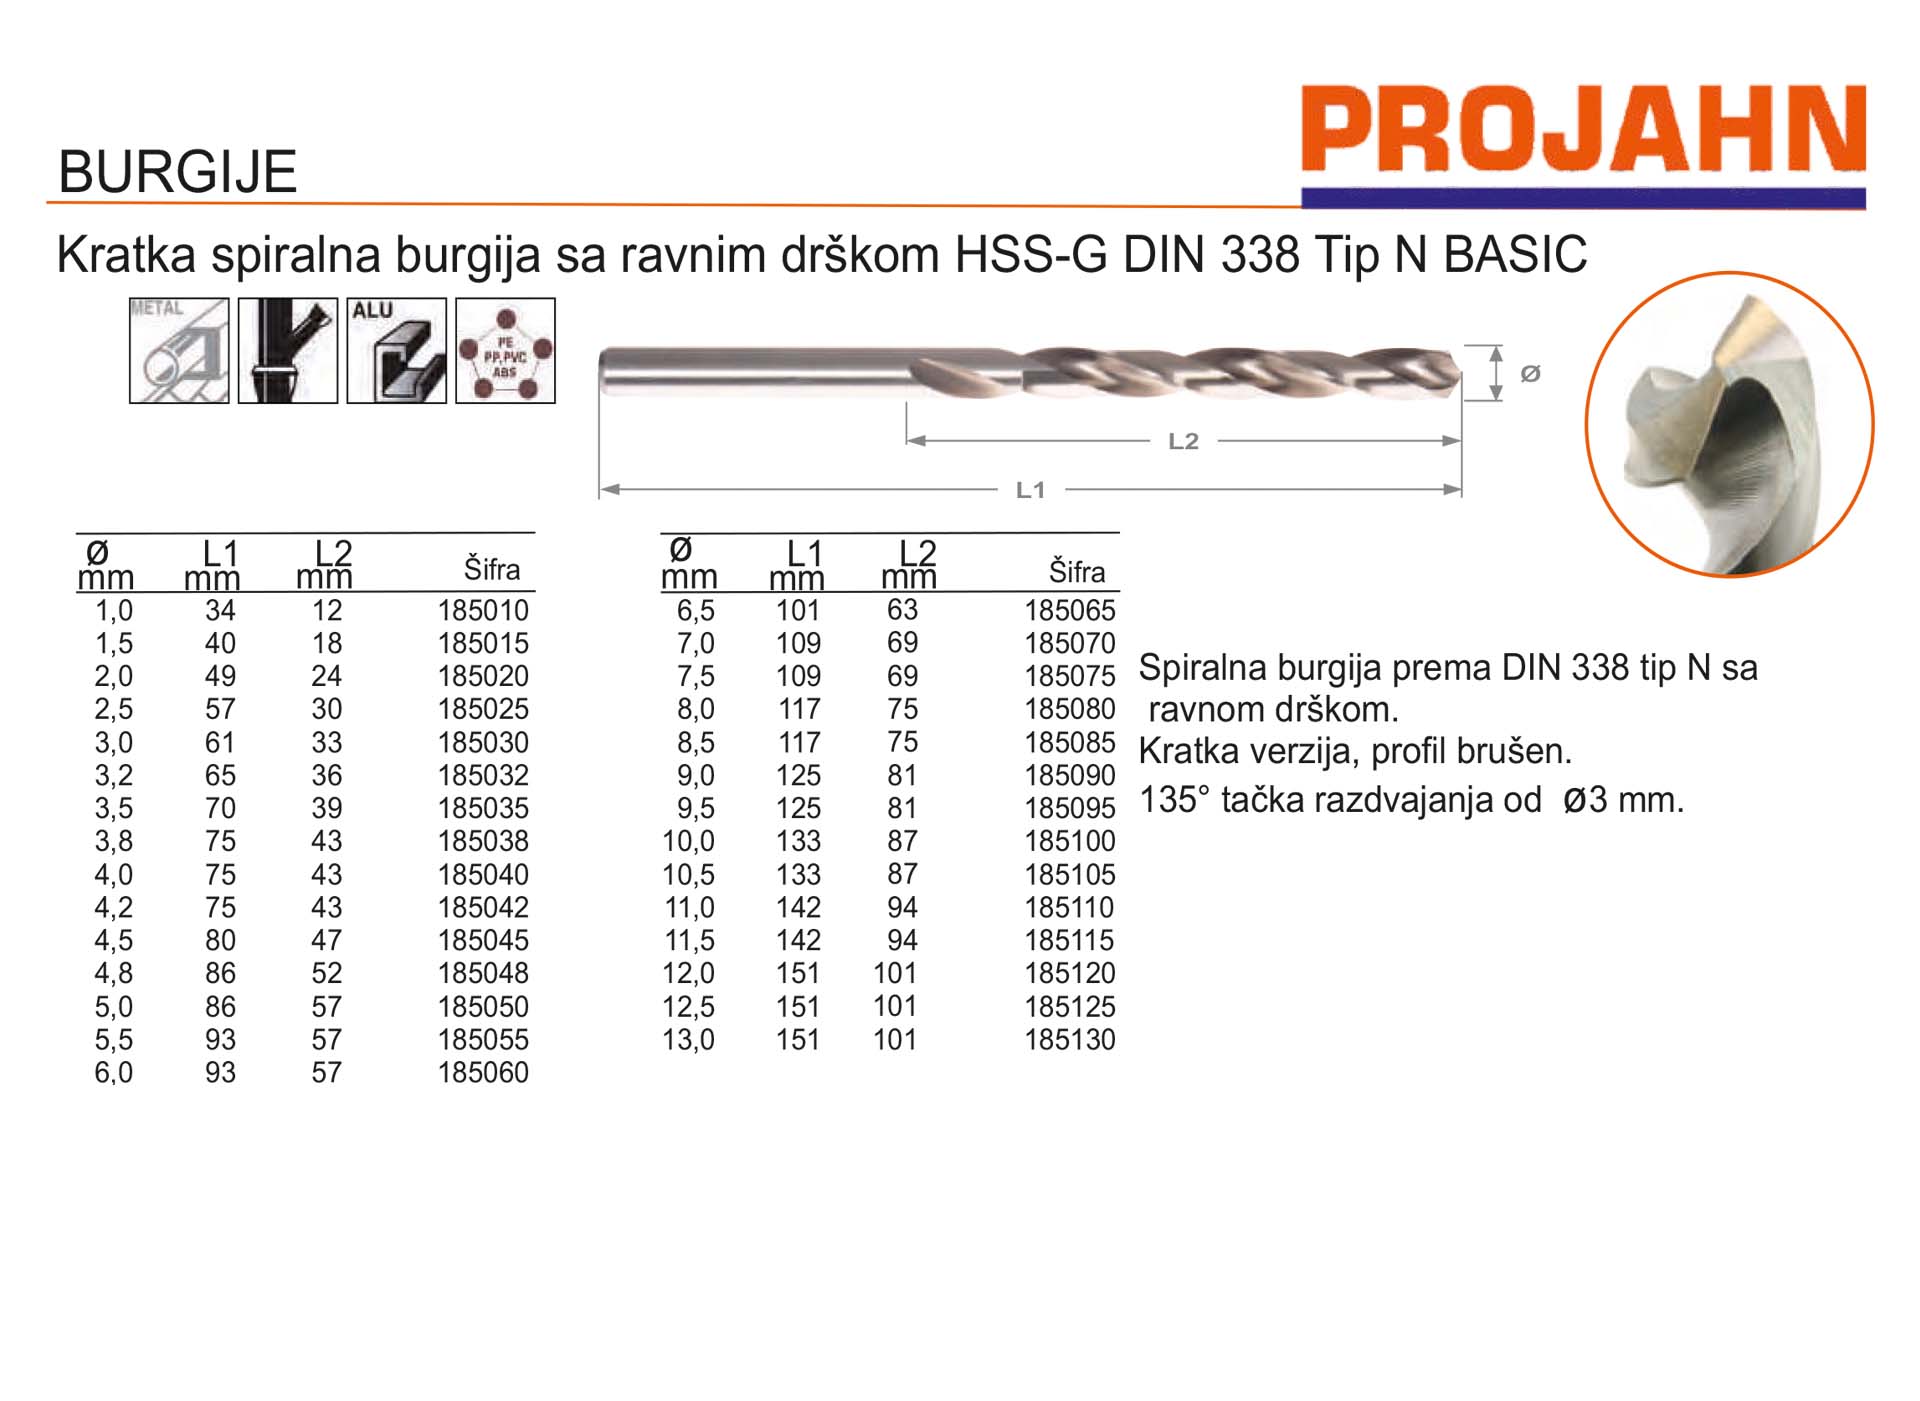 Kratka spiralna burgija sa ravnim drškom HSS-G DIN 338 Tip N BASIC